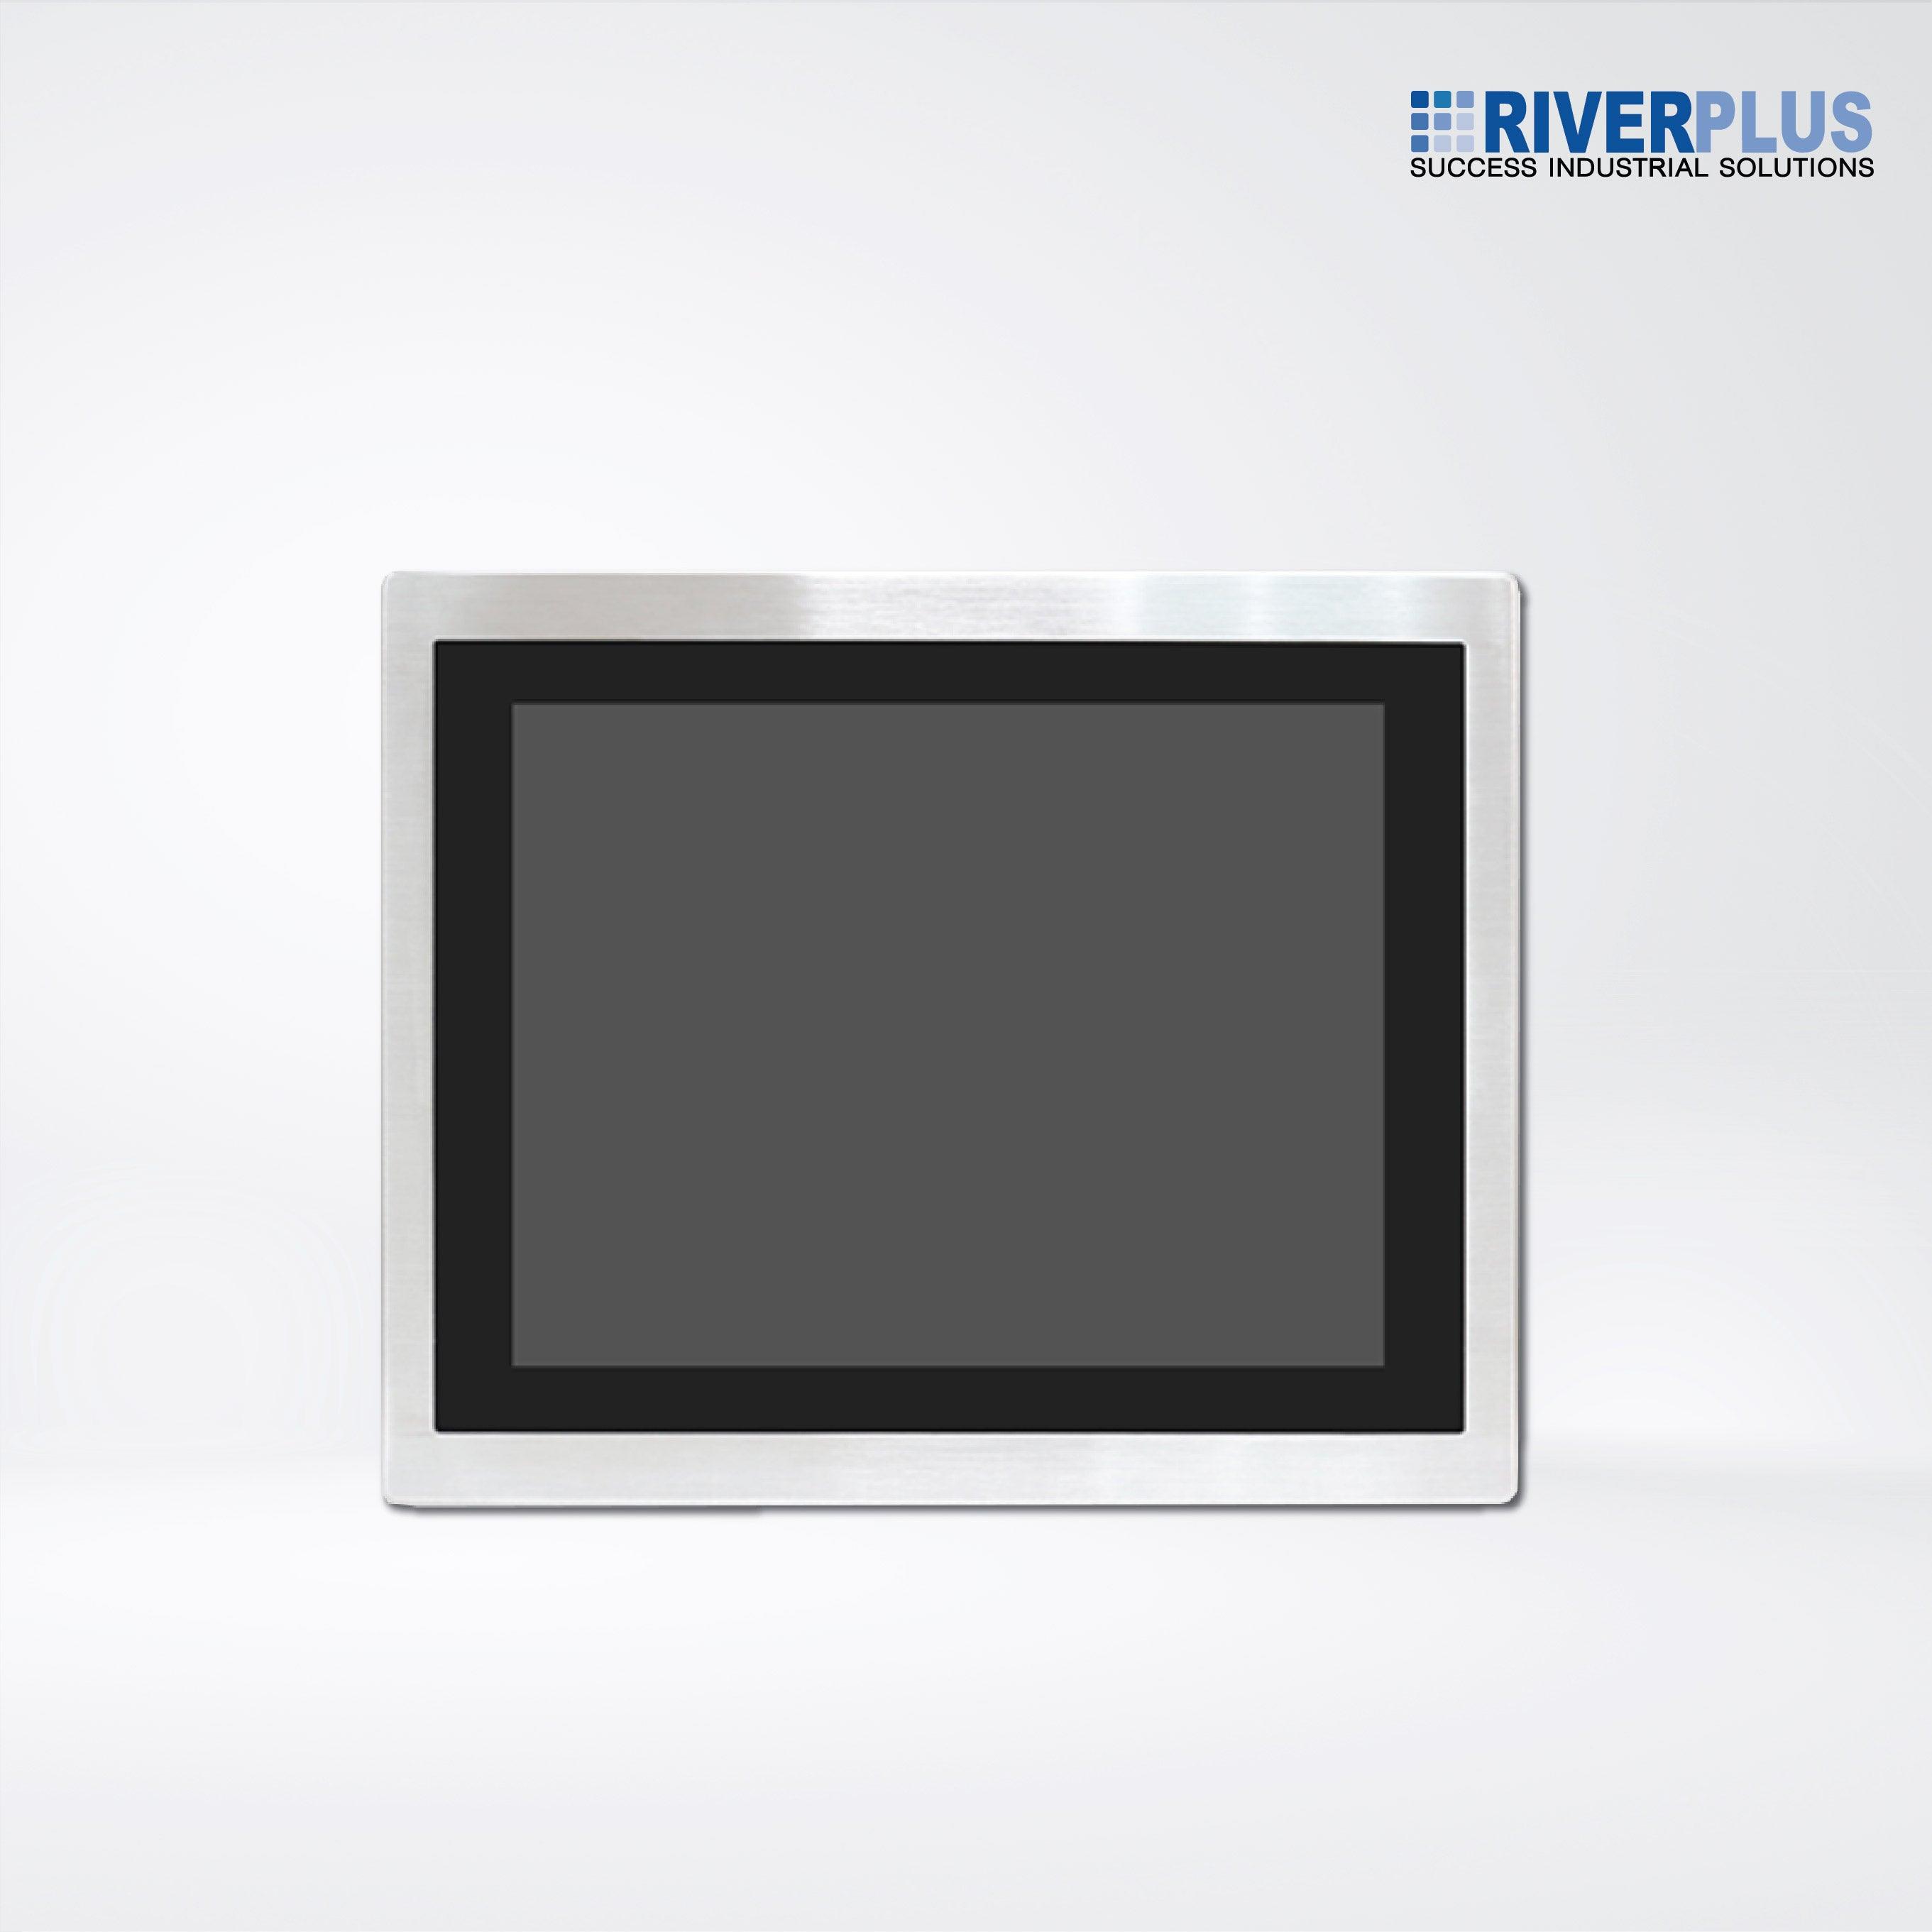 AEx-115P 15” ATEX Certified Stainless Steel Display, Luminance : 450 (cd/m²) - Riverplus